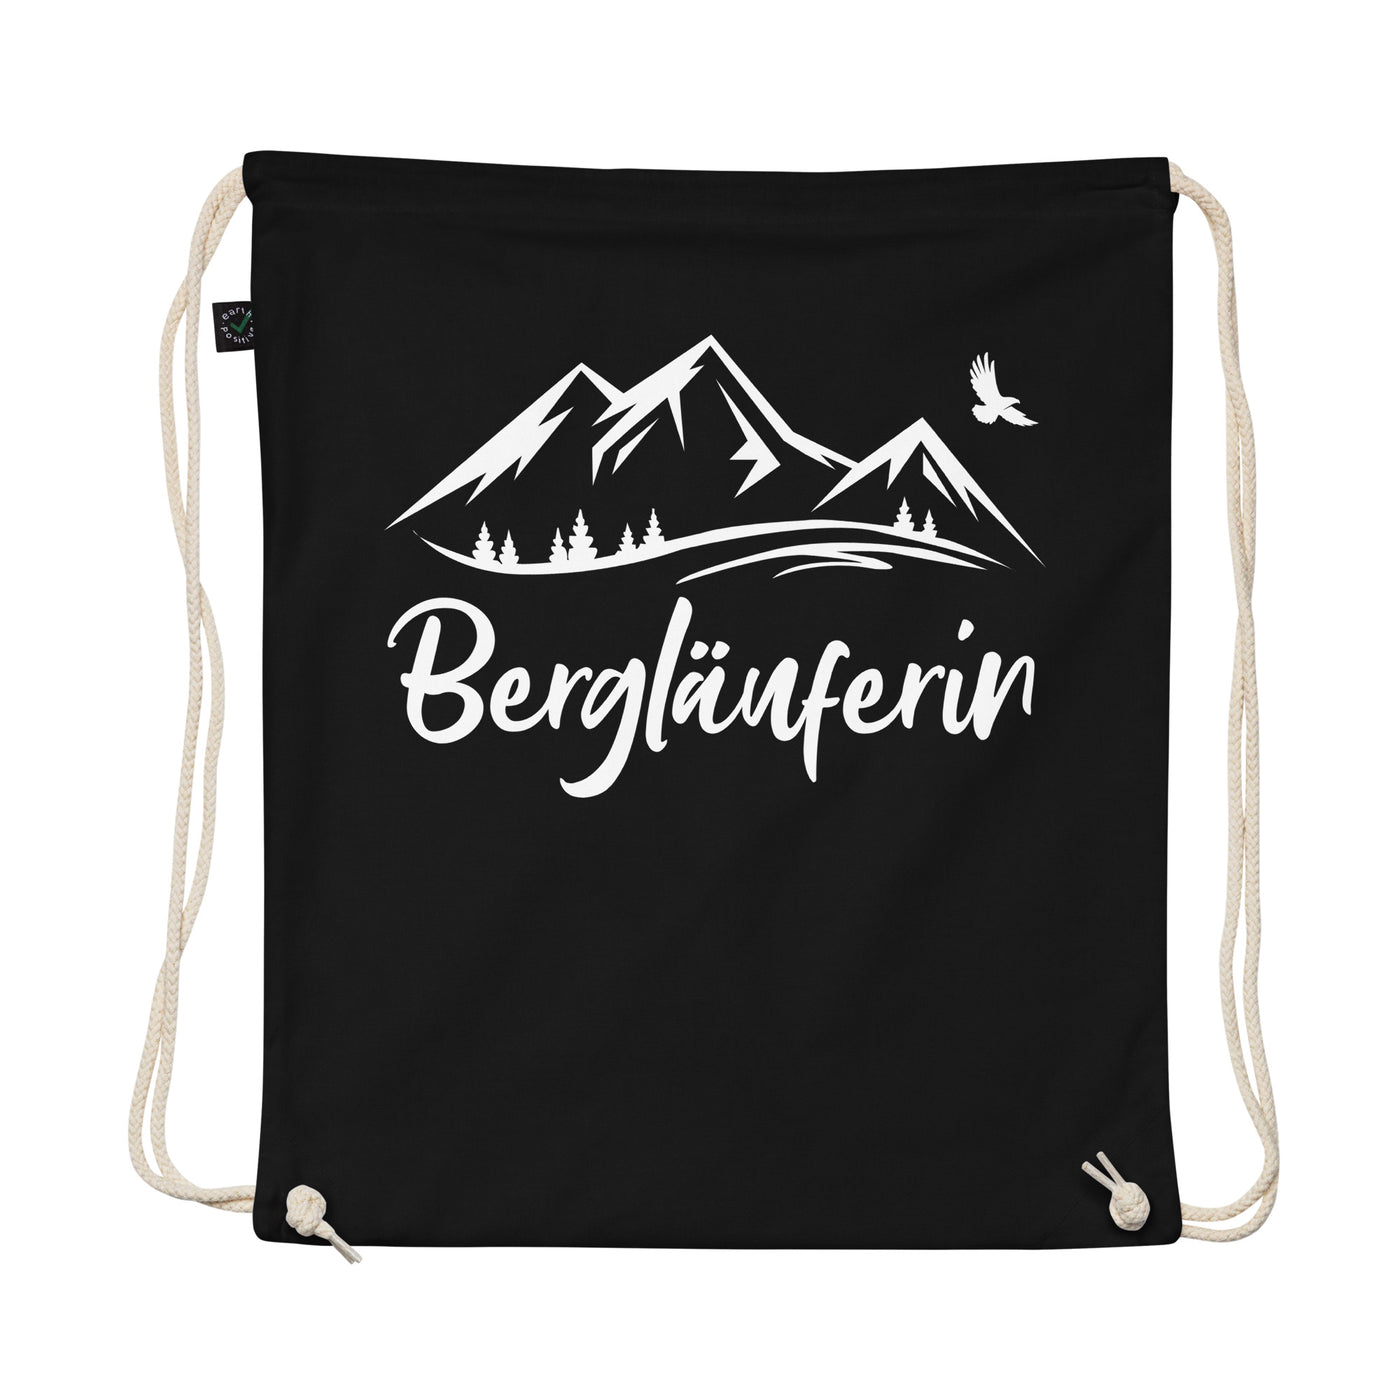 Berglanferin - Organic Turnbeutel berge